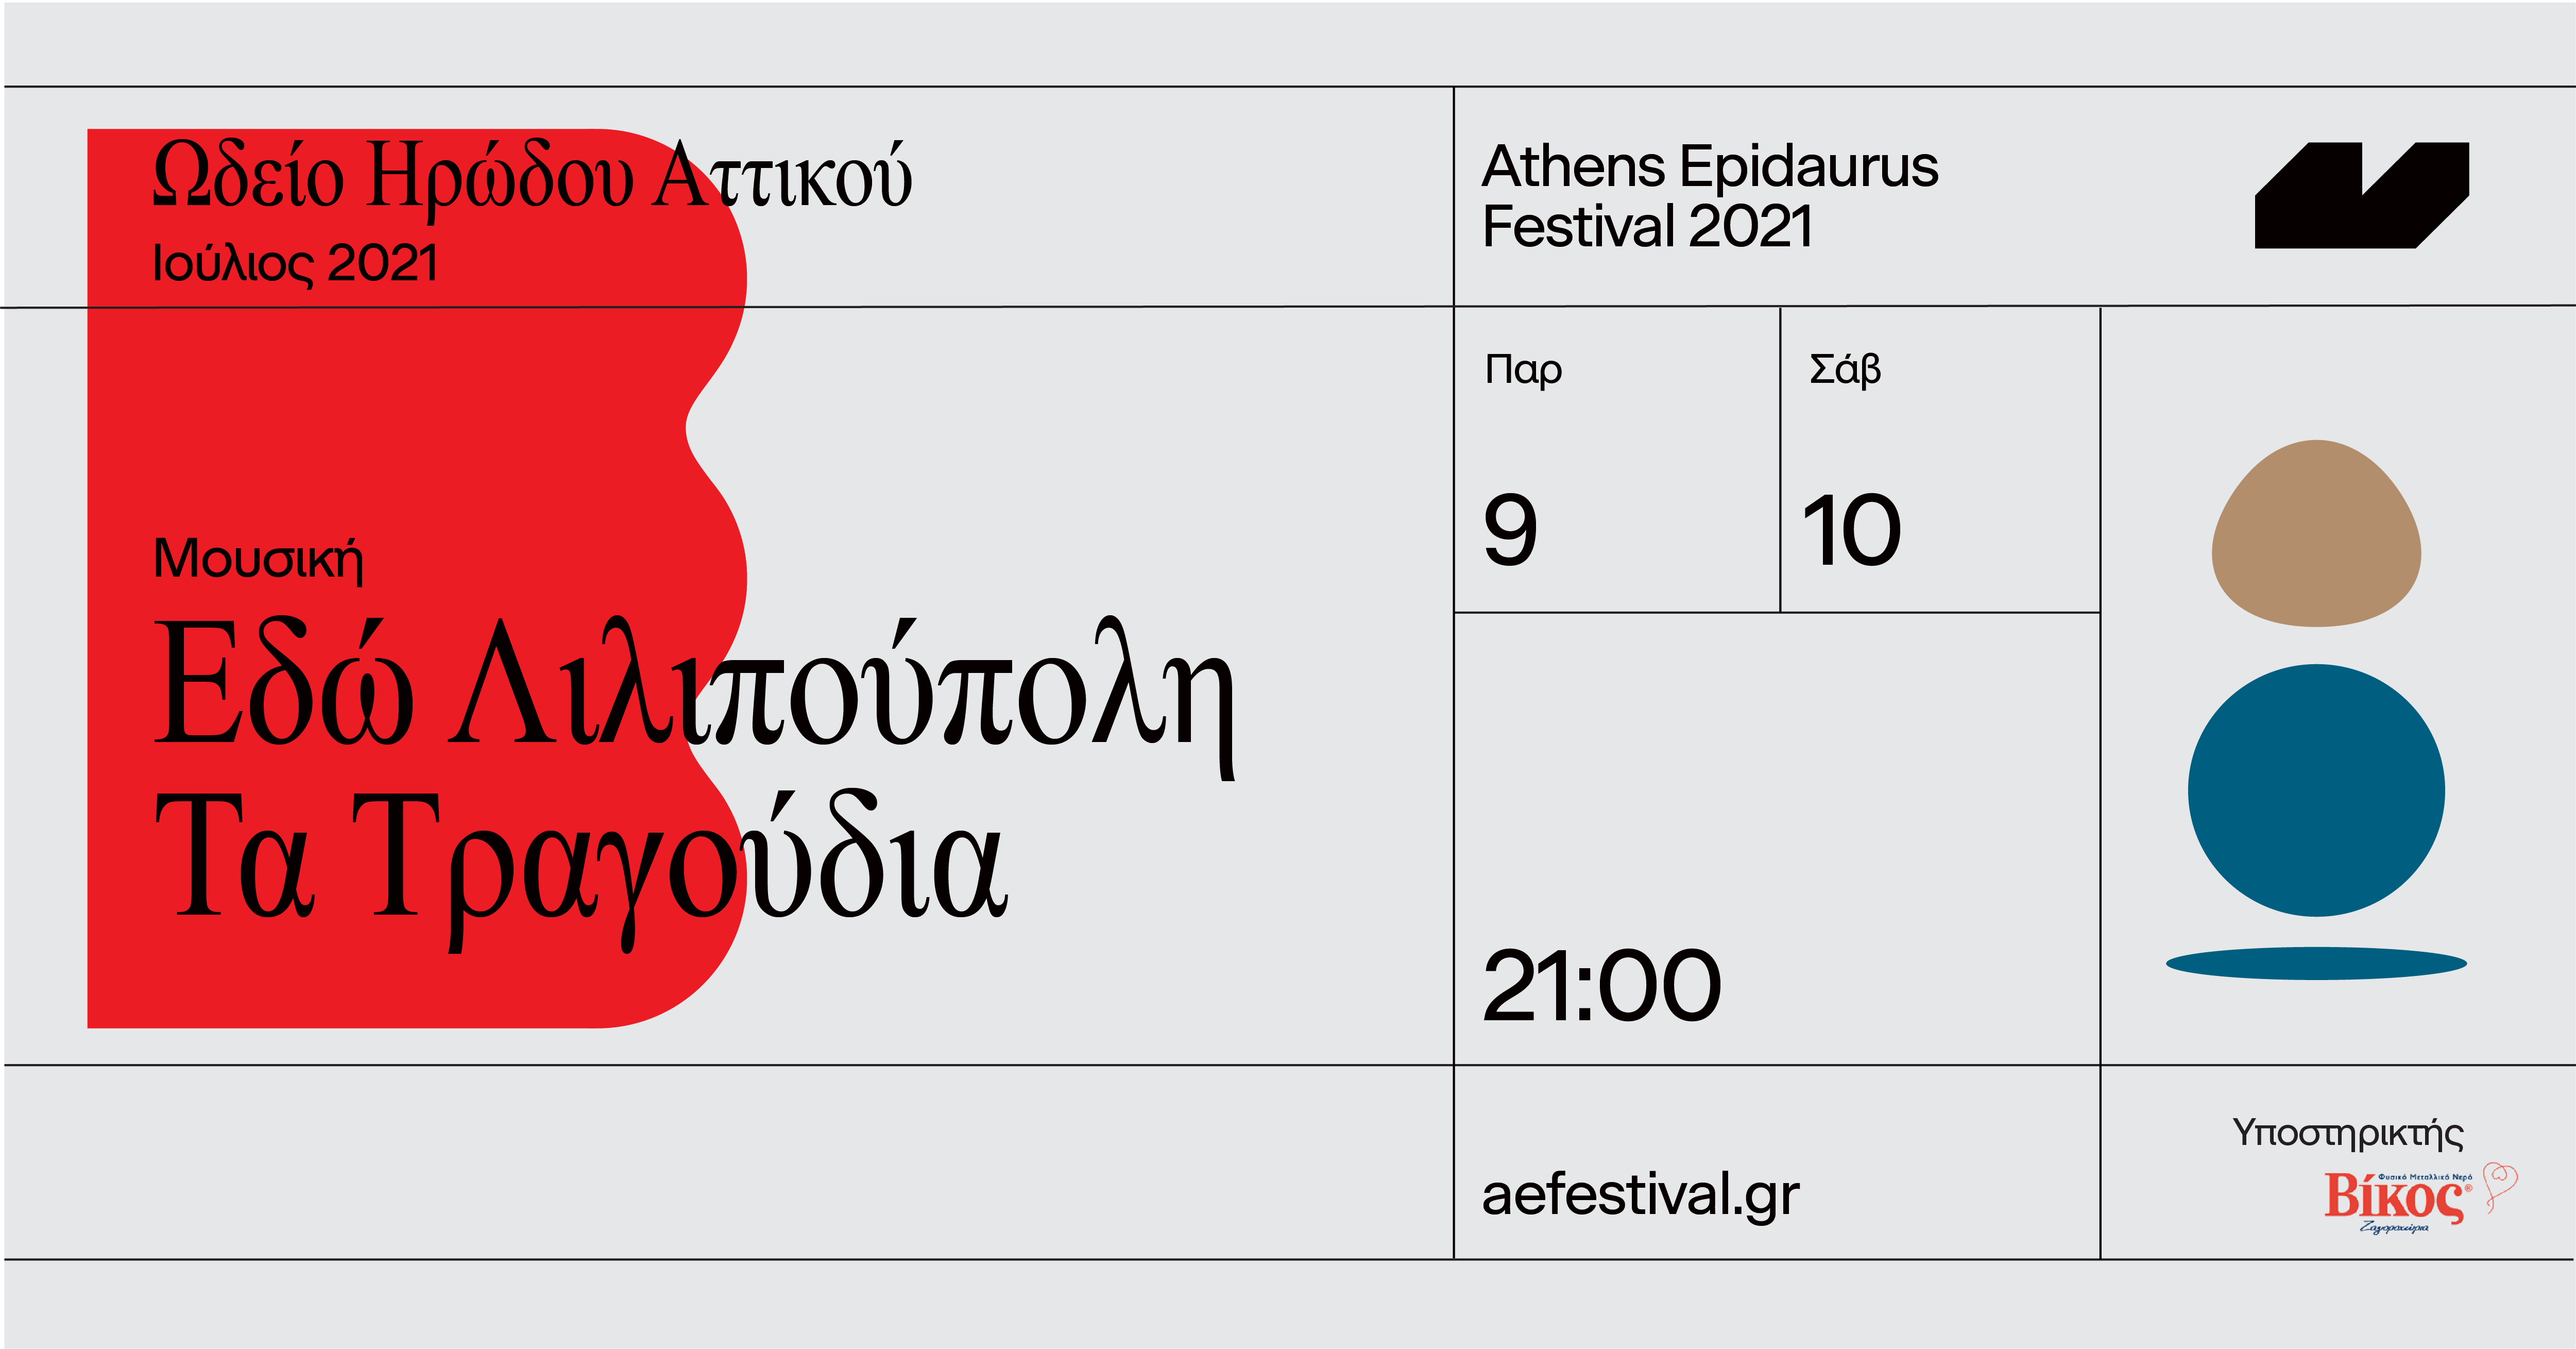 AEF2021 FB Event Cover Lilipoupoli 02